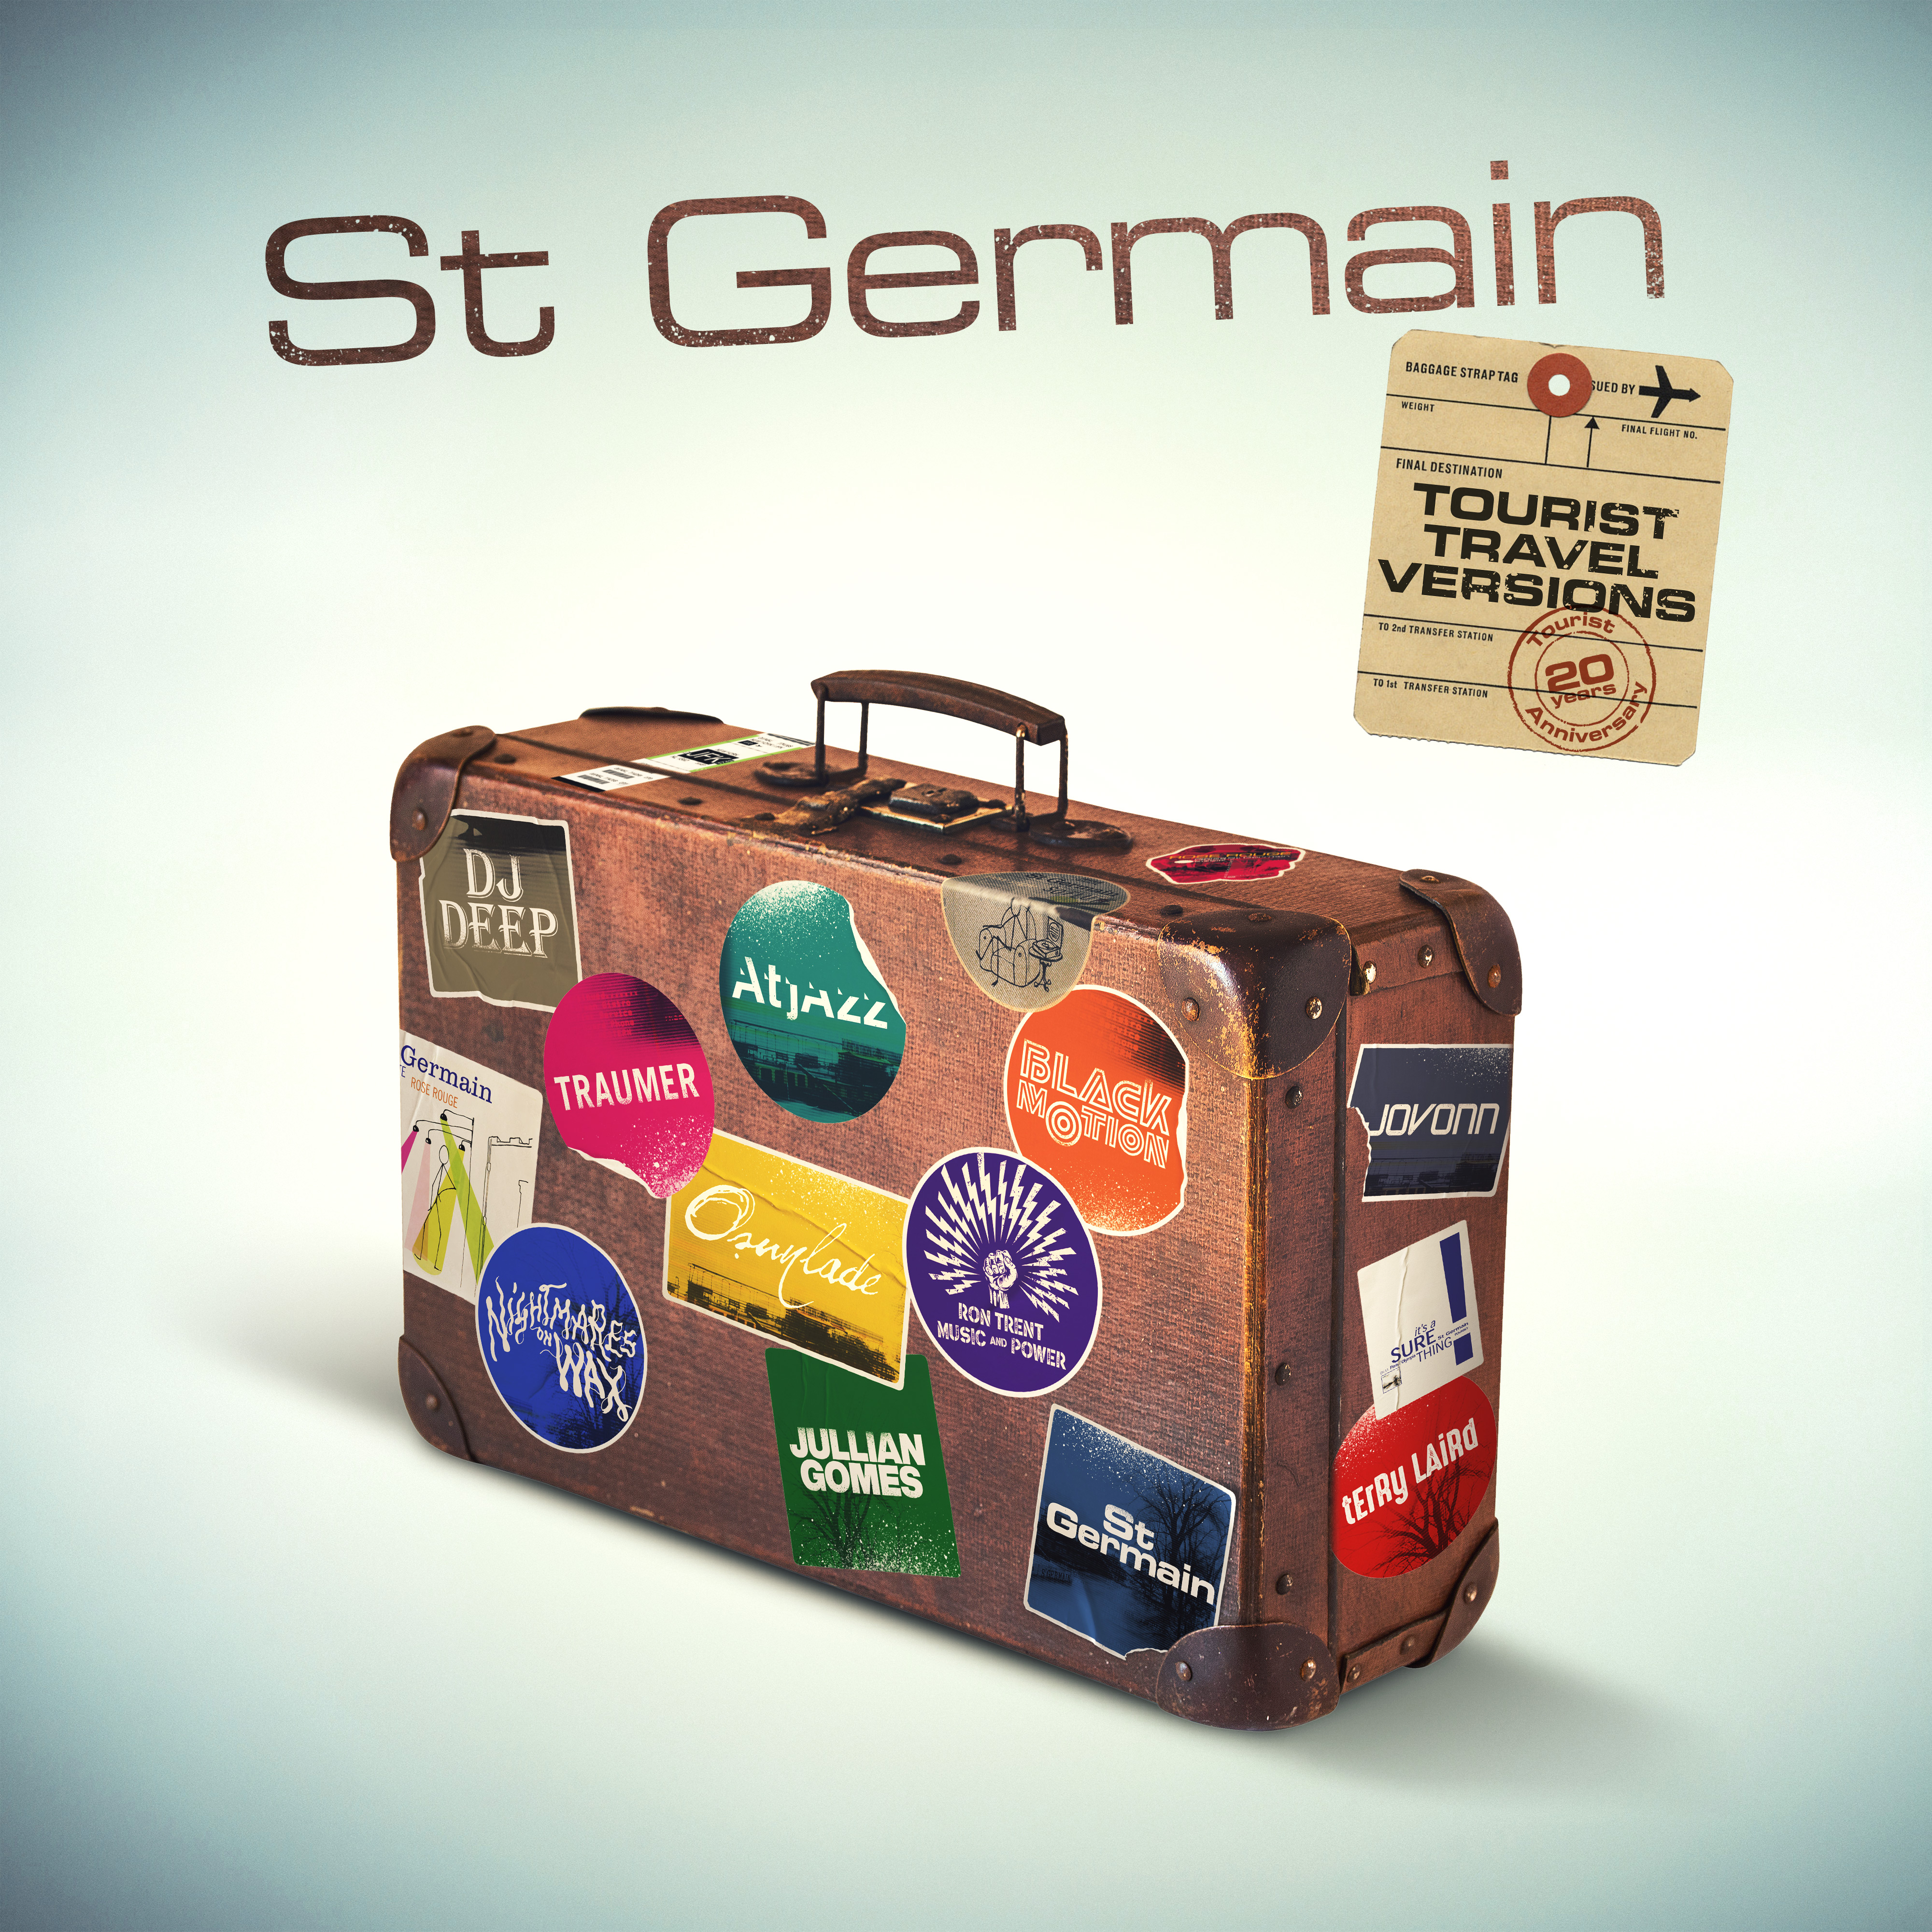 Travel версия. St Germain Tourist. St. Germain "Tourist (2lp)". St Germain - Tourist - 2000 LP. Набор подарочный Travel Version 2.